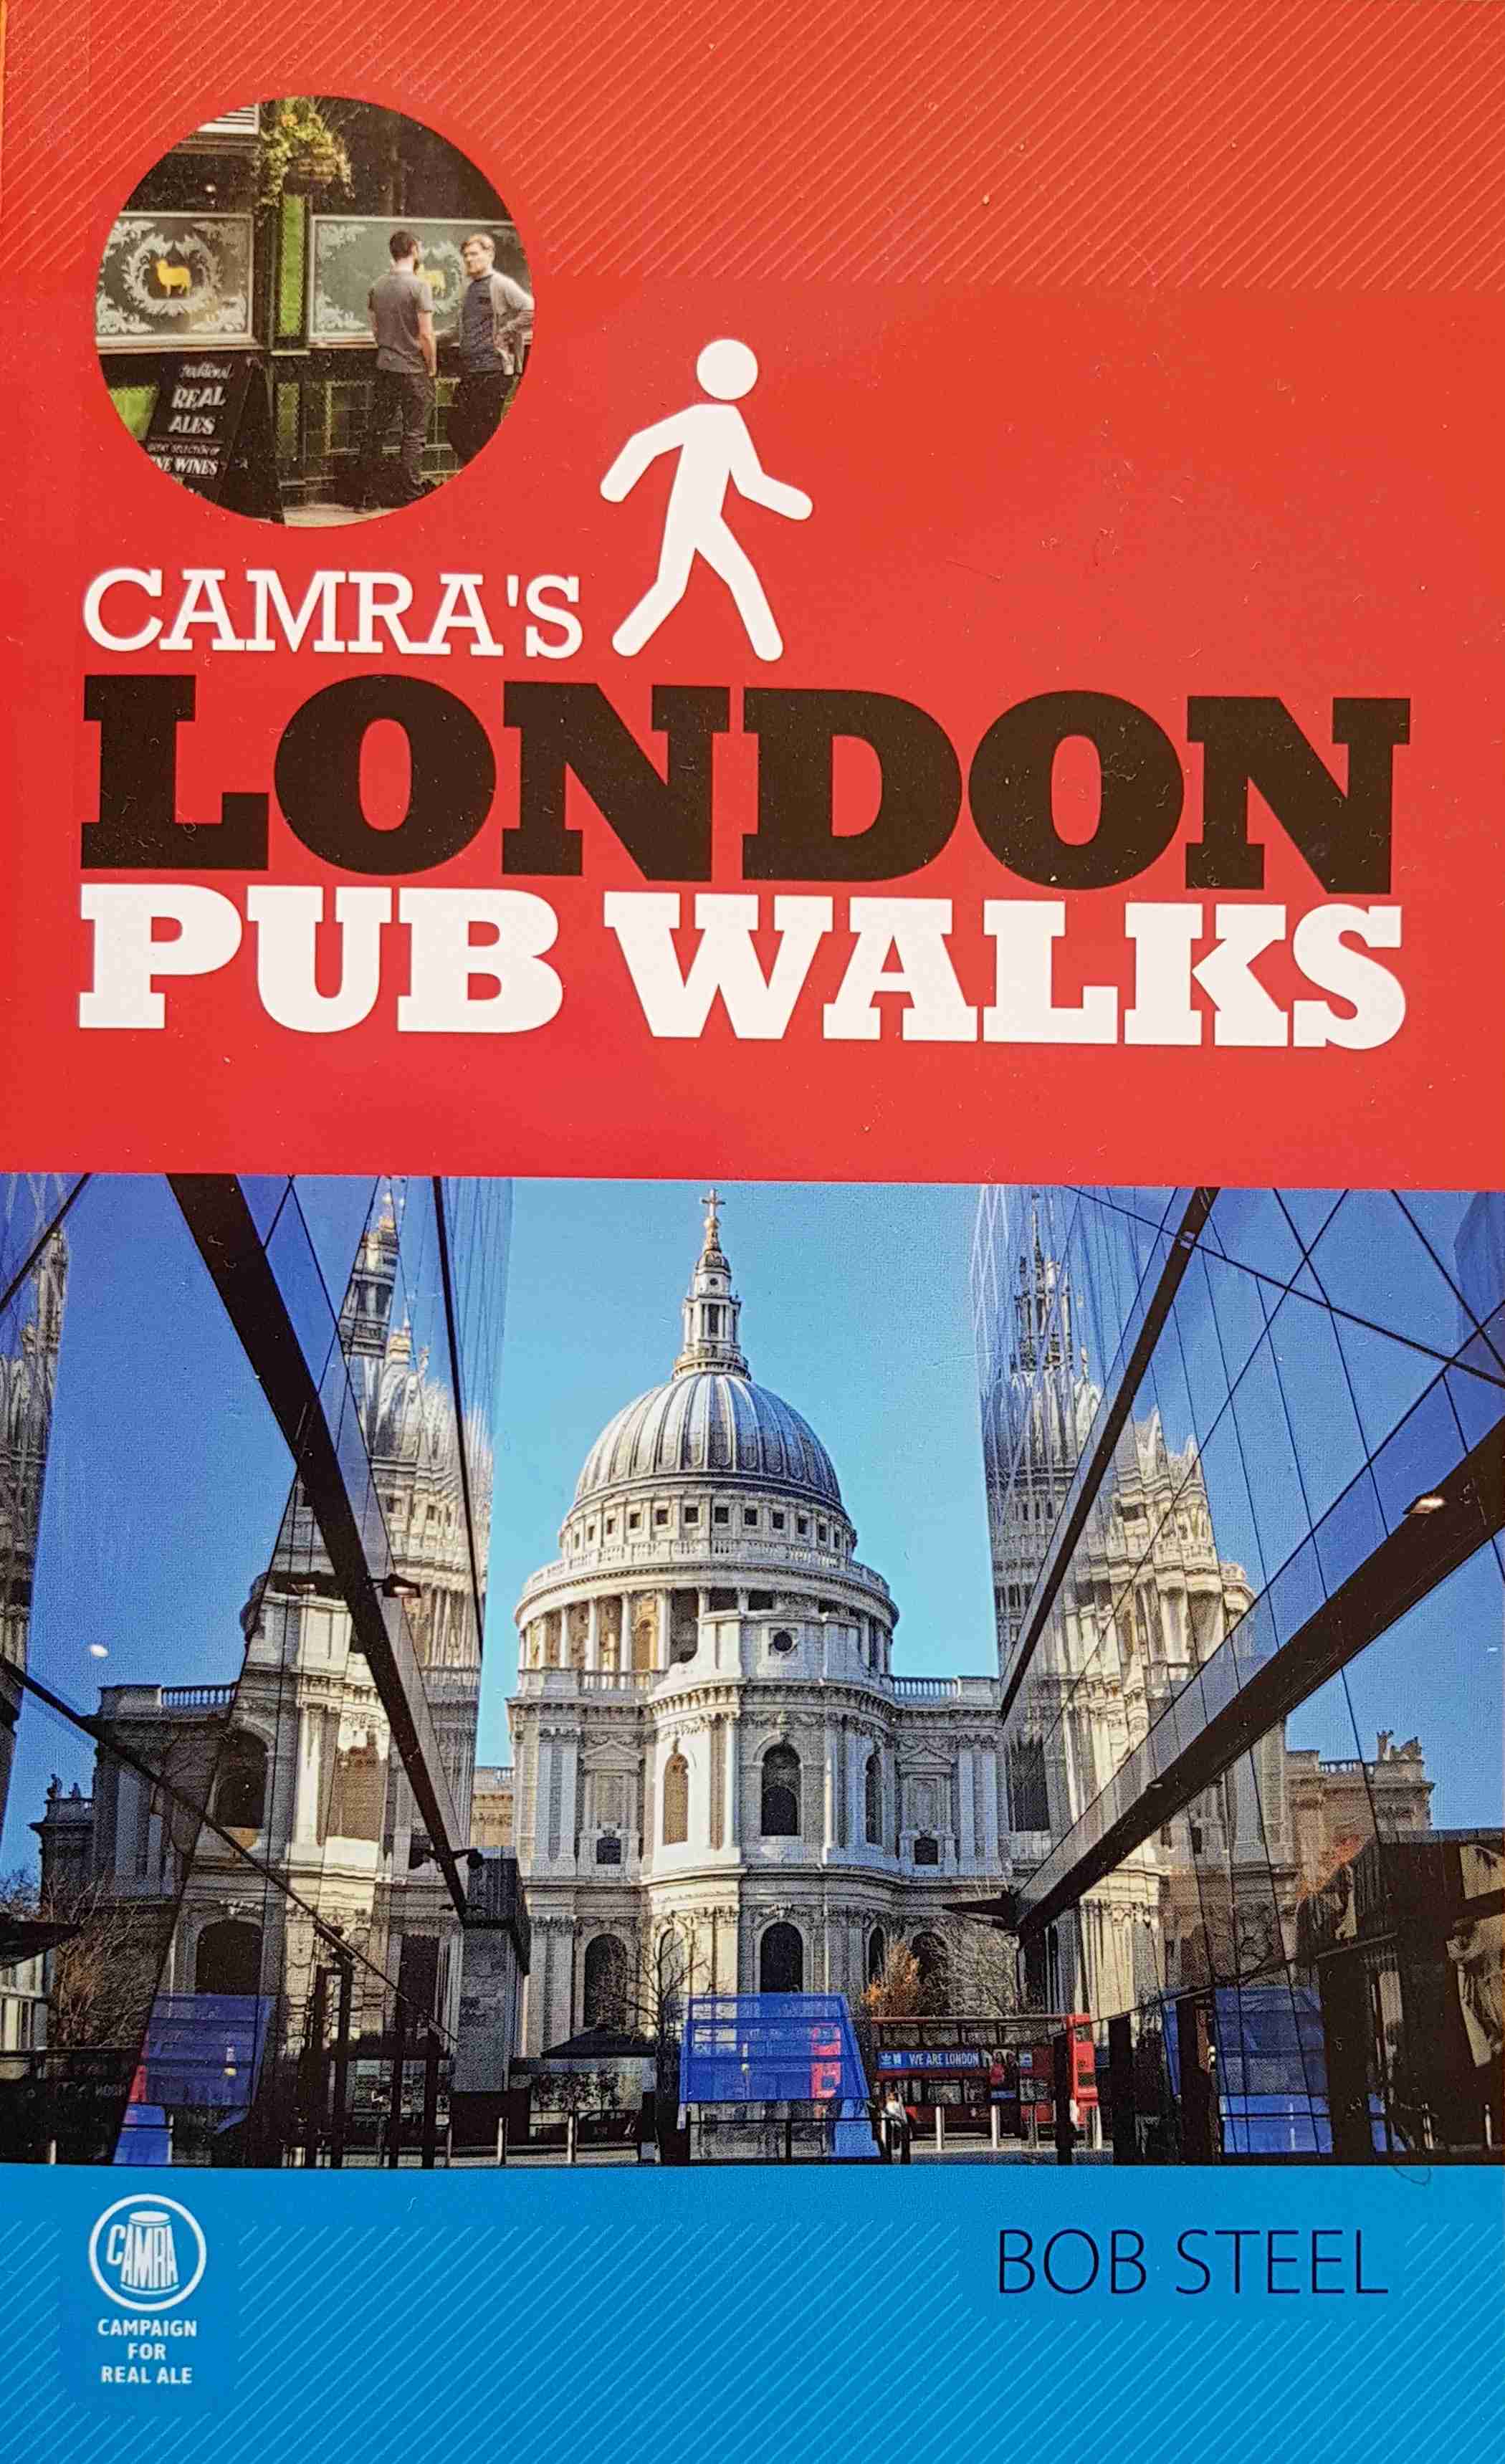 Picture of Camra's London pub walks by artist Bob Steel 